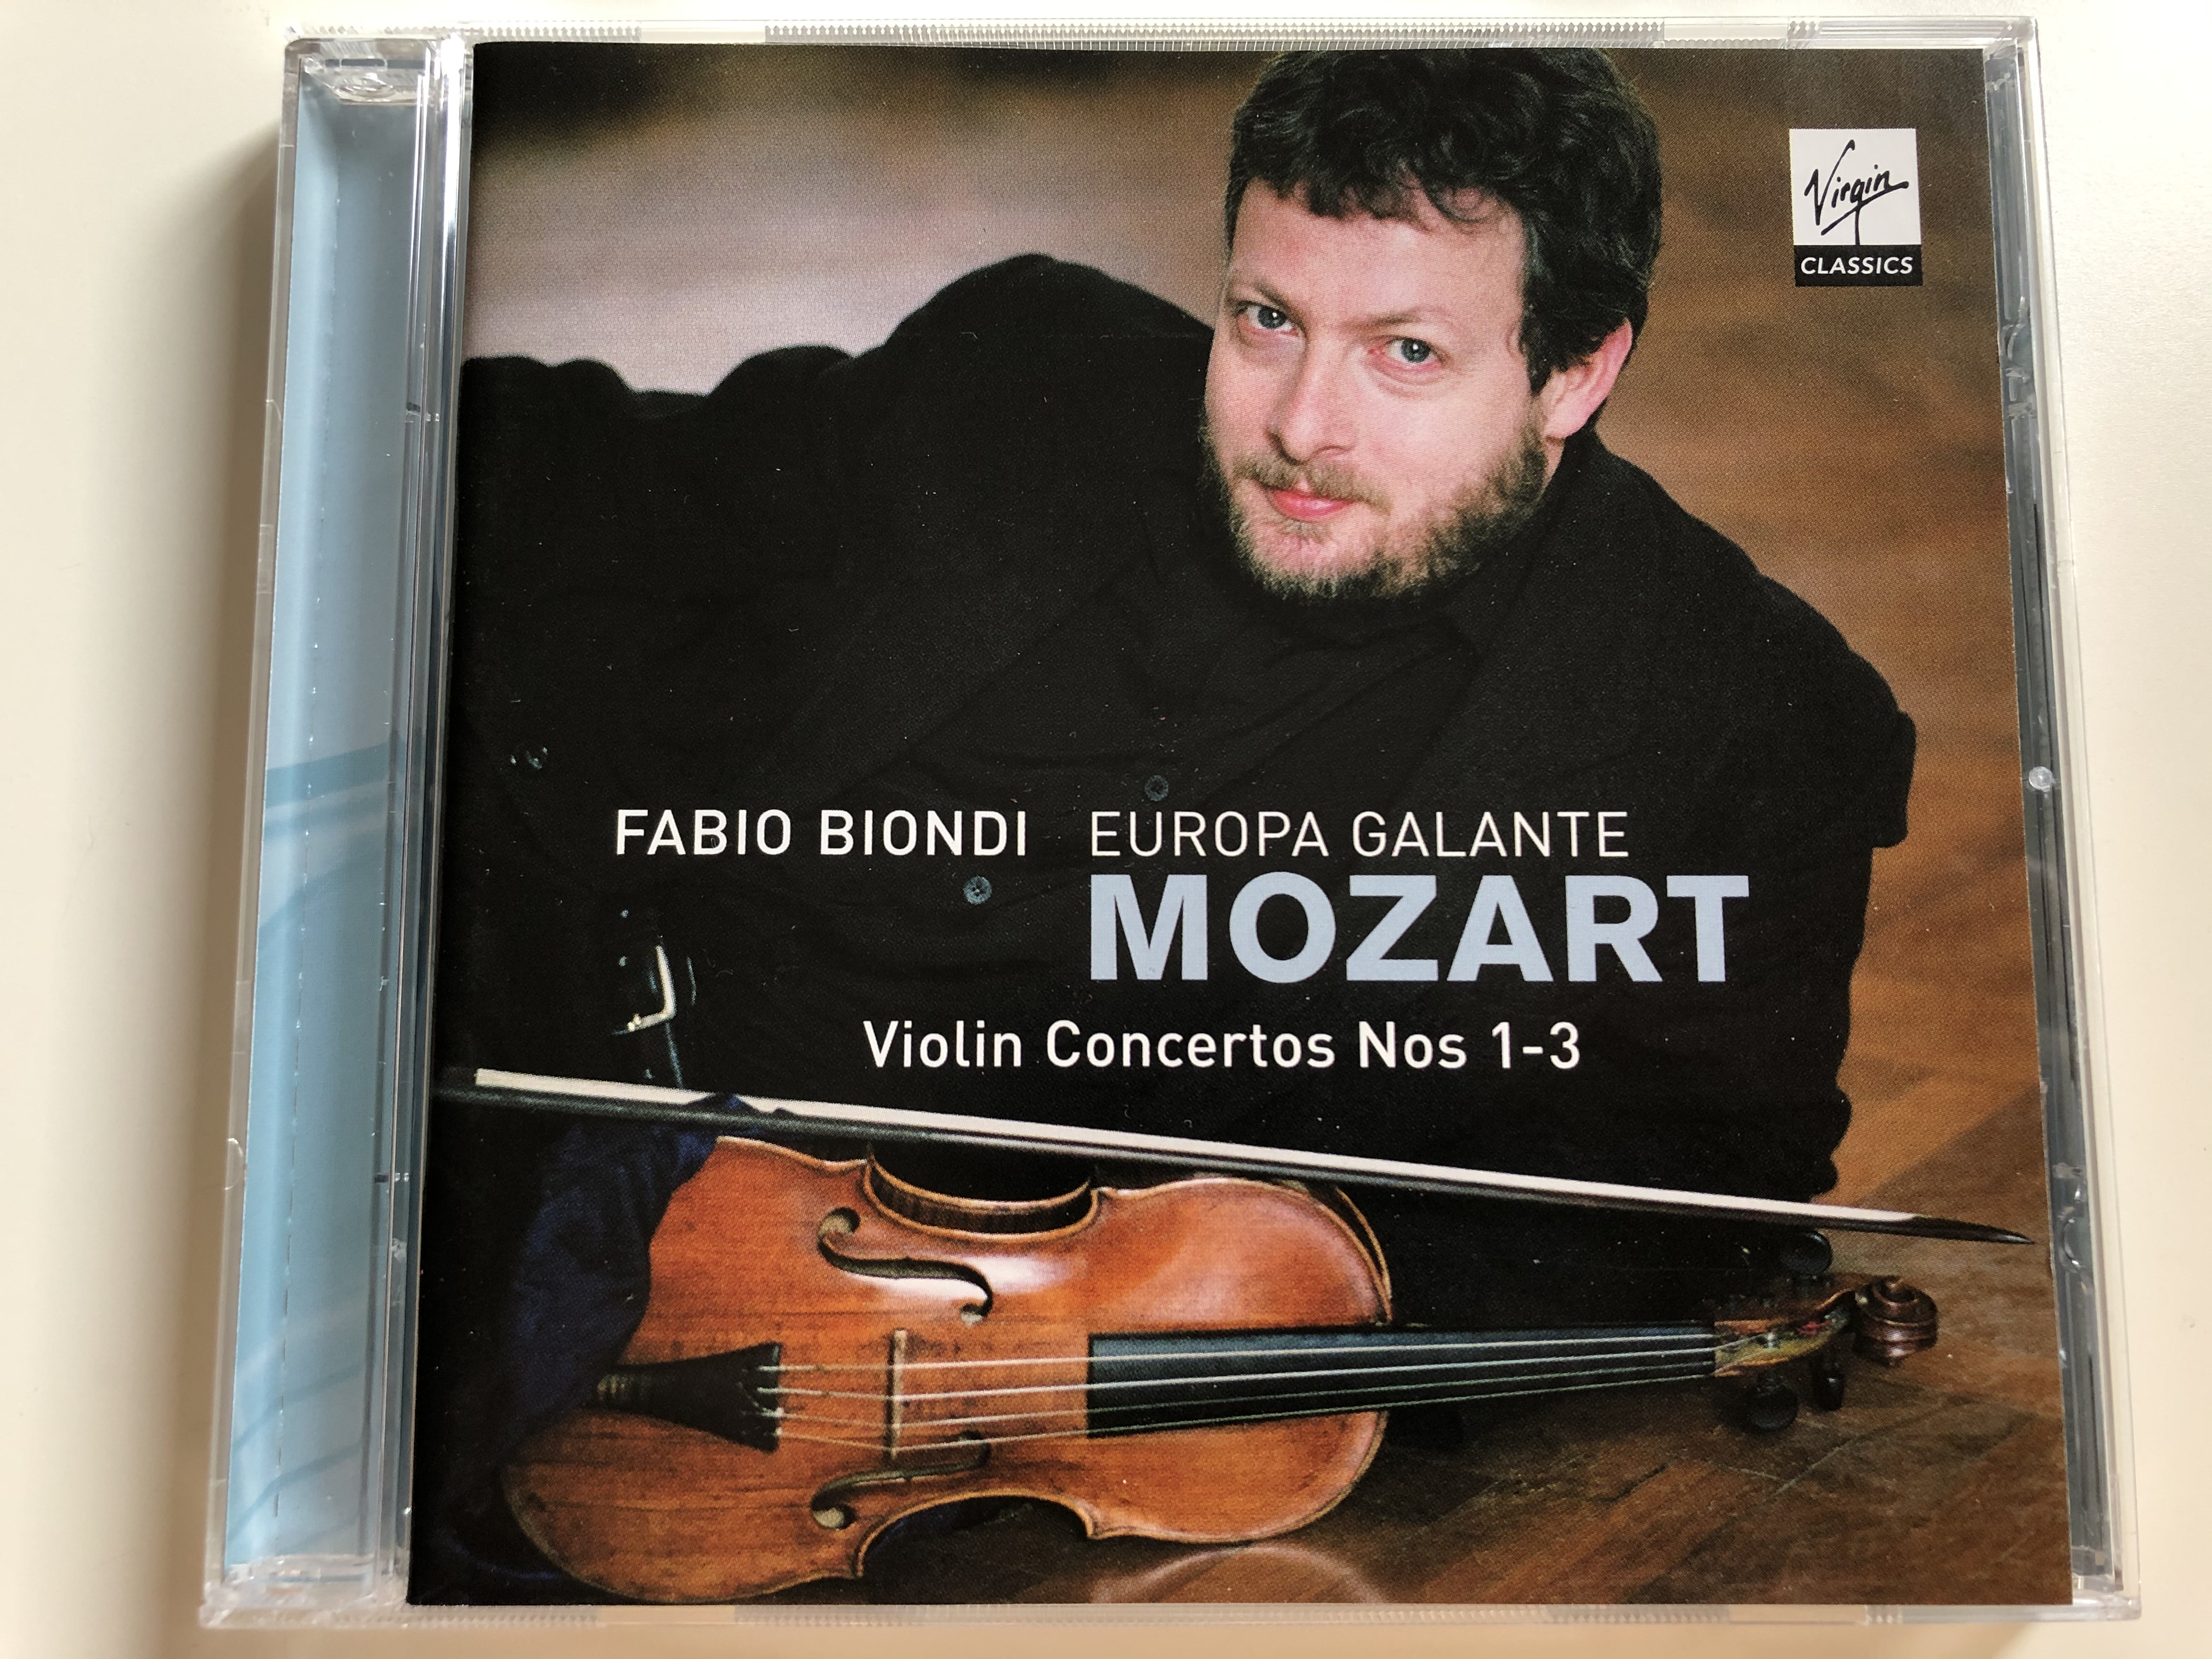 fabio-biondi-europa-galante-mozart-violin-concertos-nos.-1-3-virgin-classics-audio-cd-2006-0946-3-44706-2-9-1-.jpg